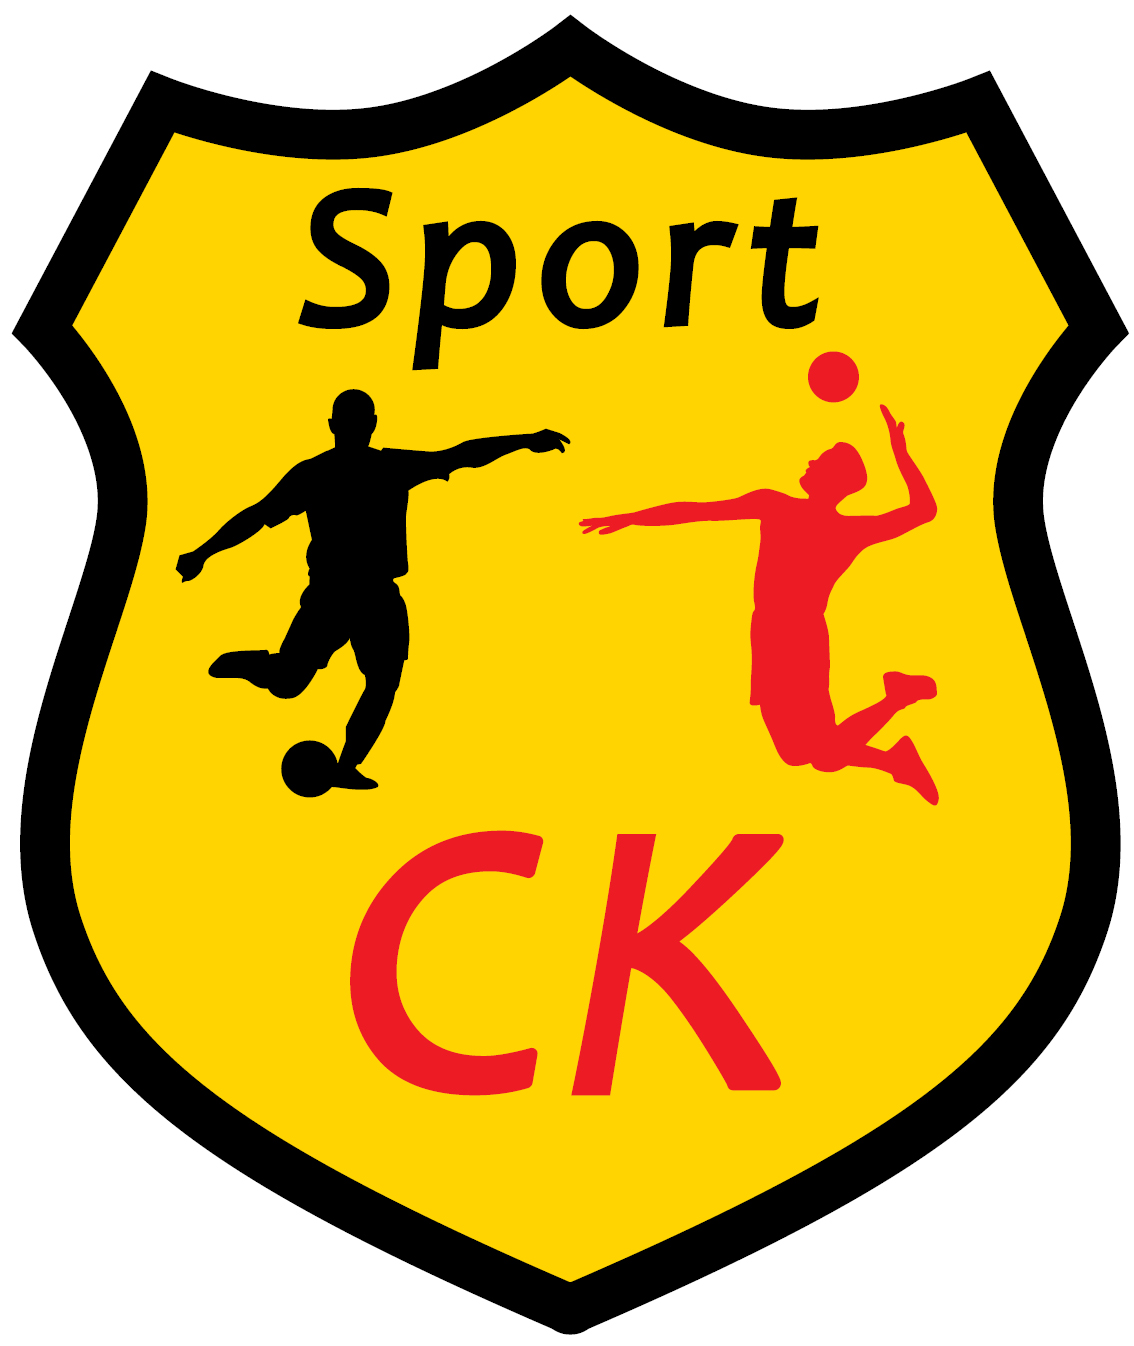 Sport CK Kielce Logo